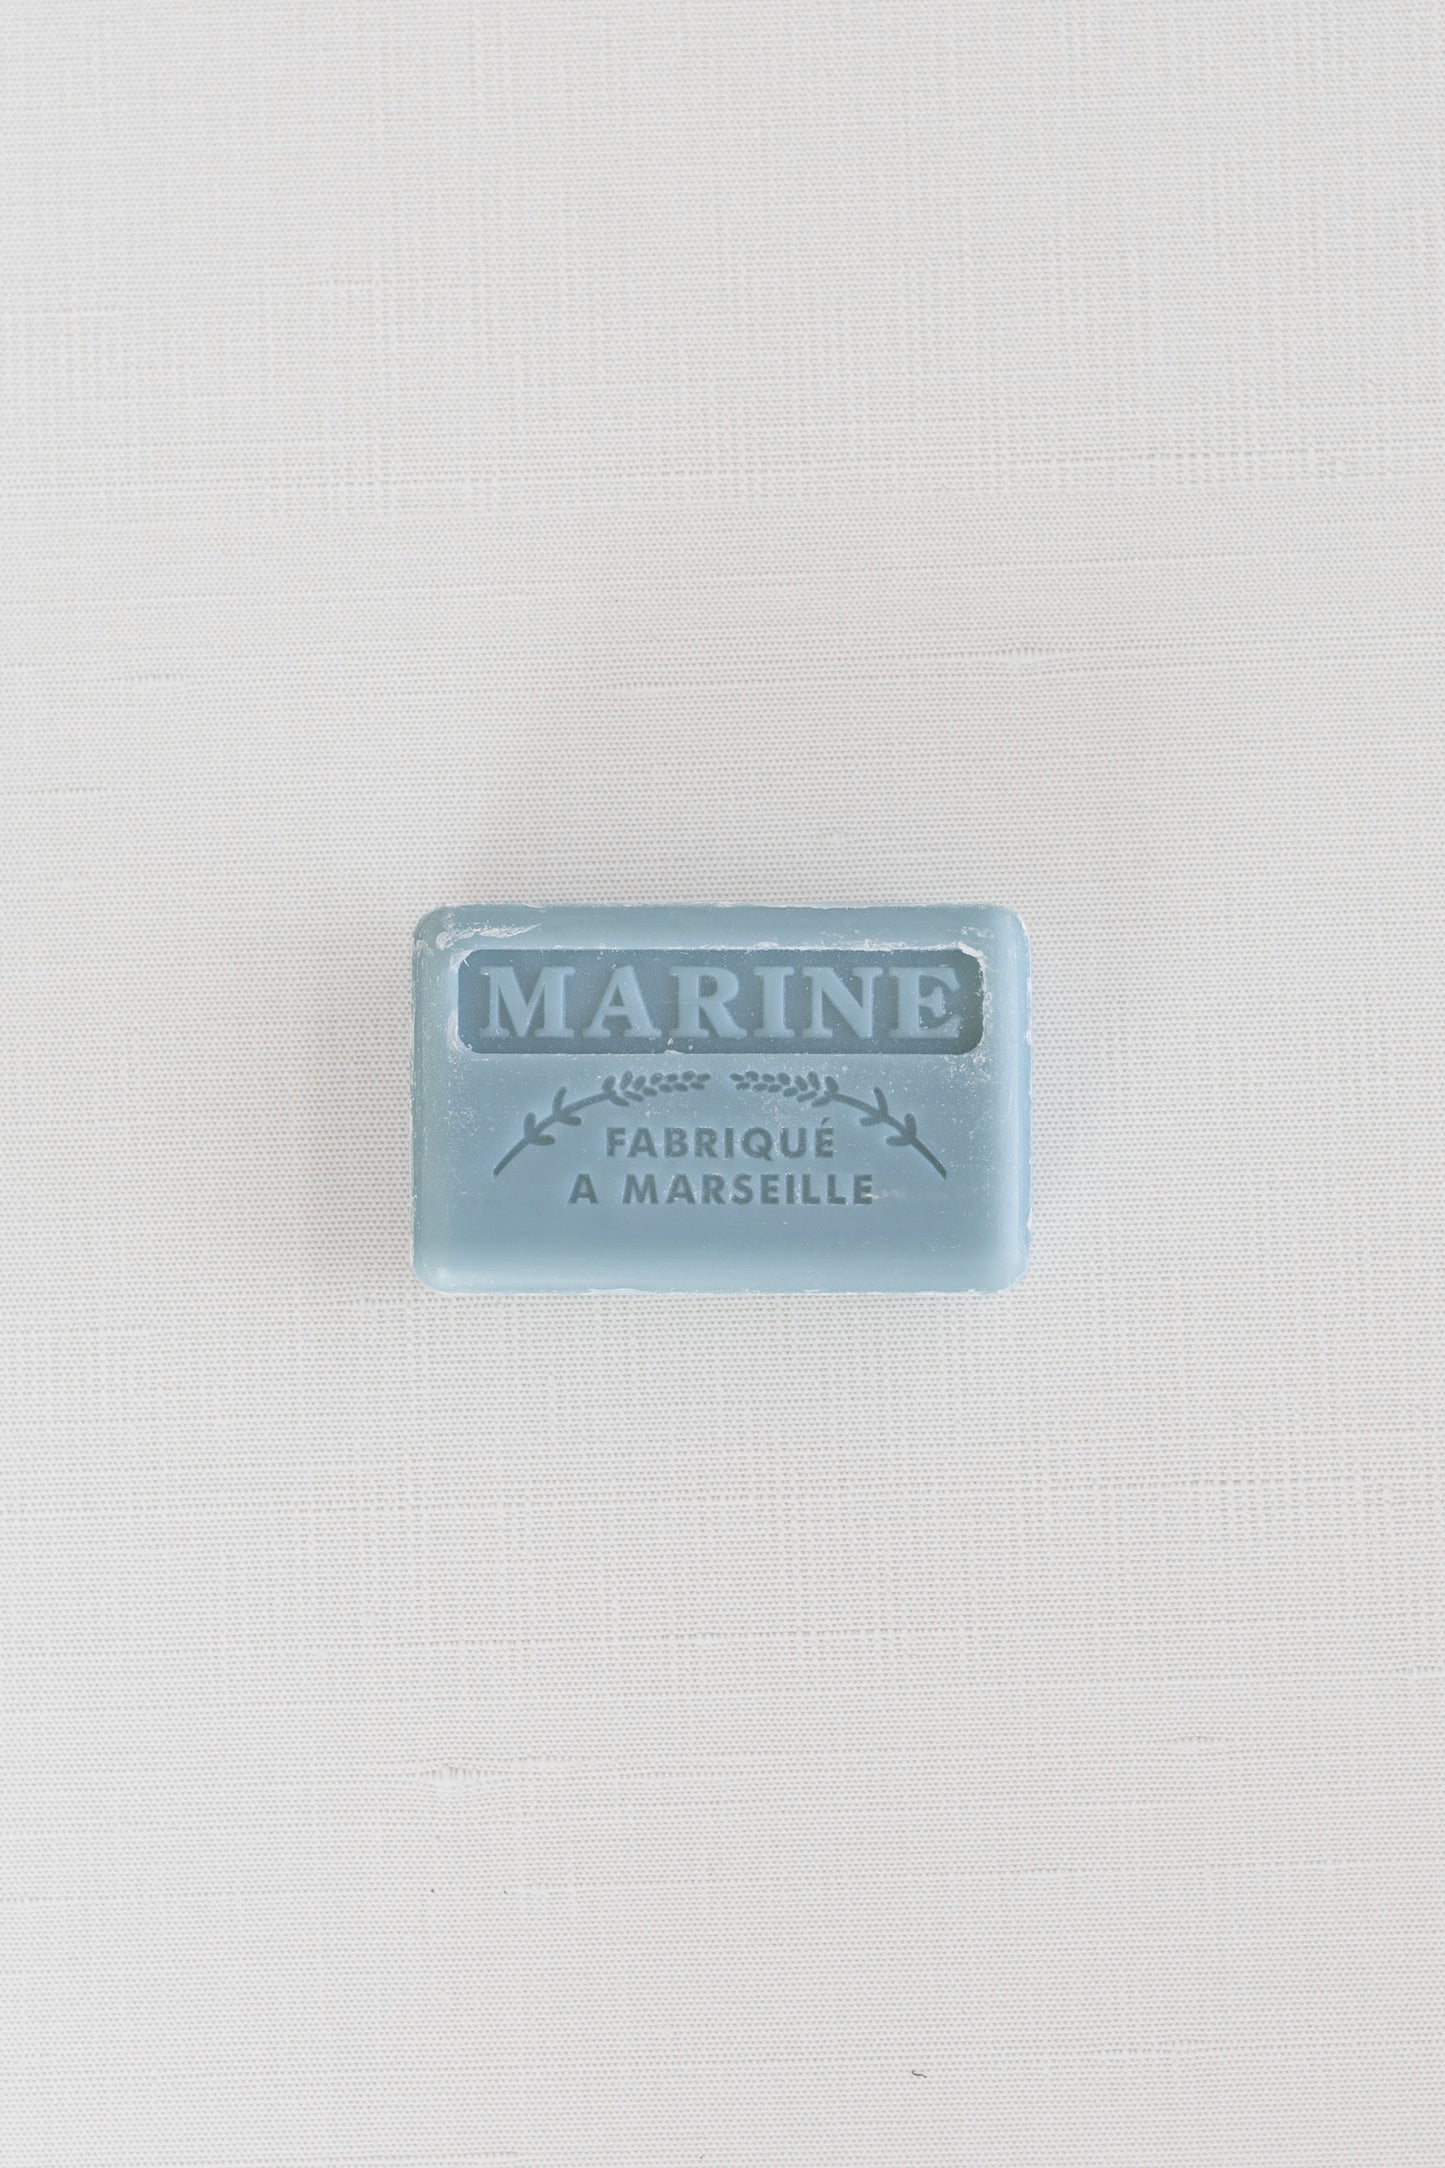 Marine French Soap